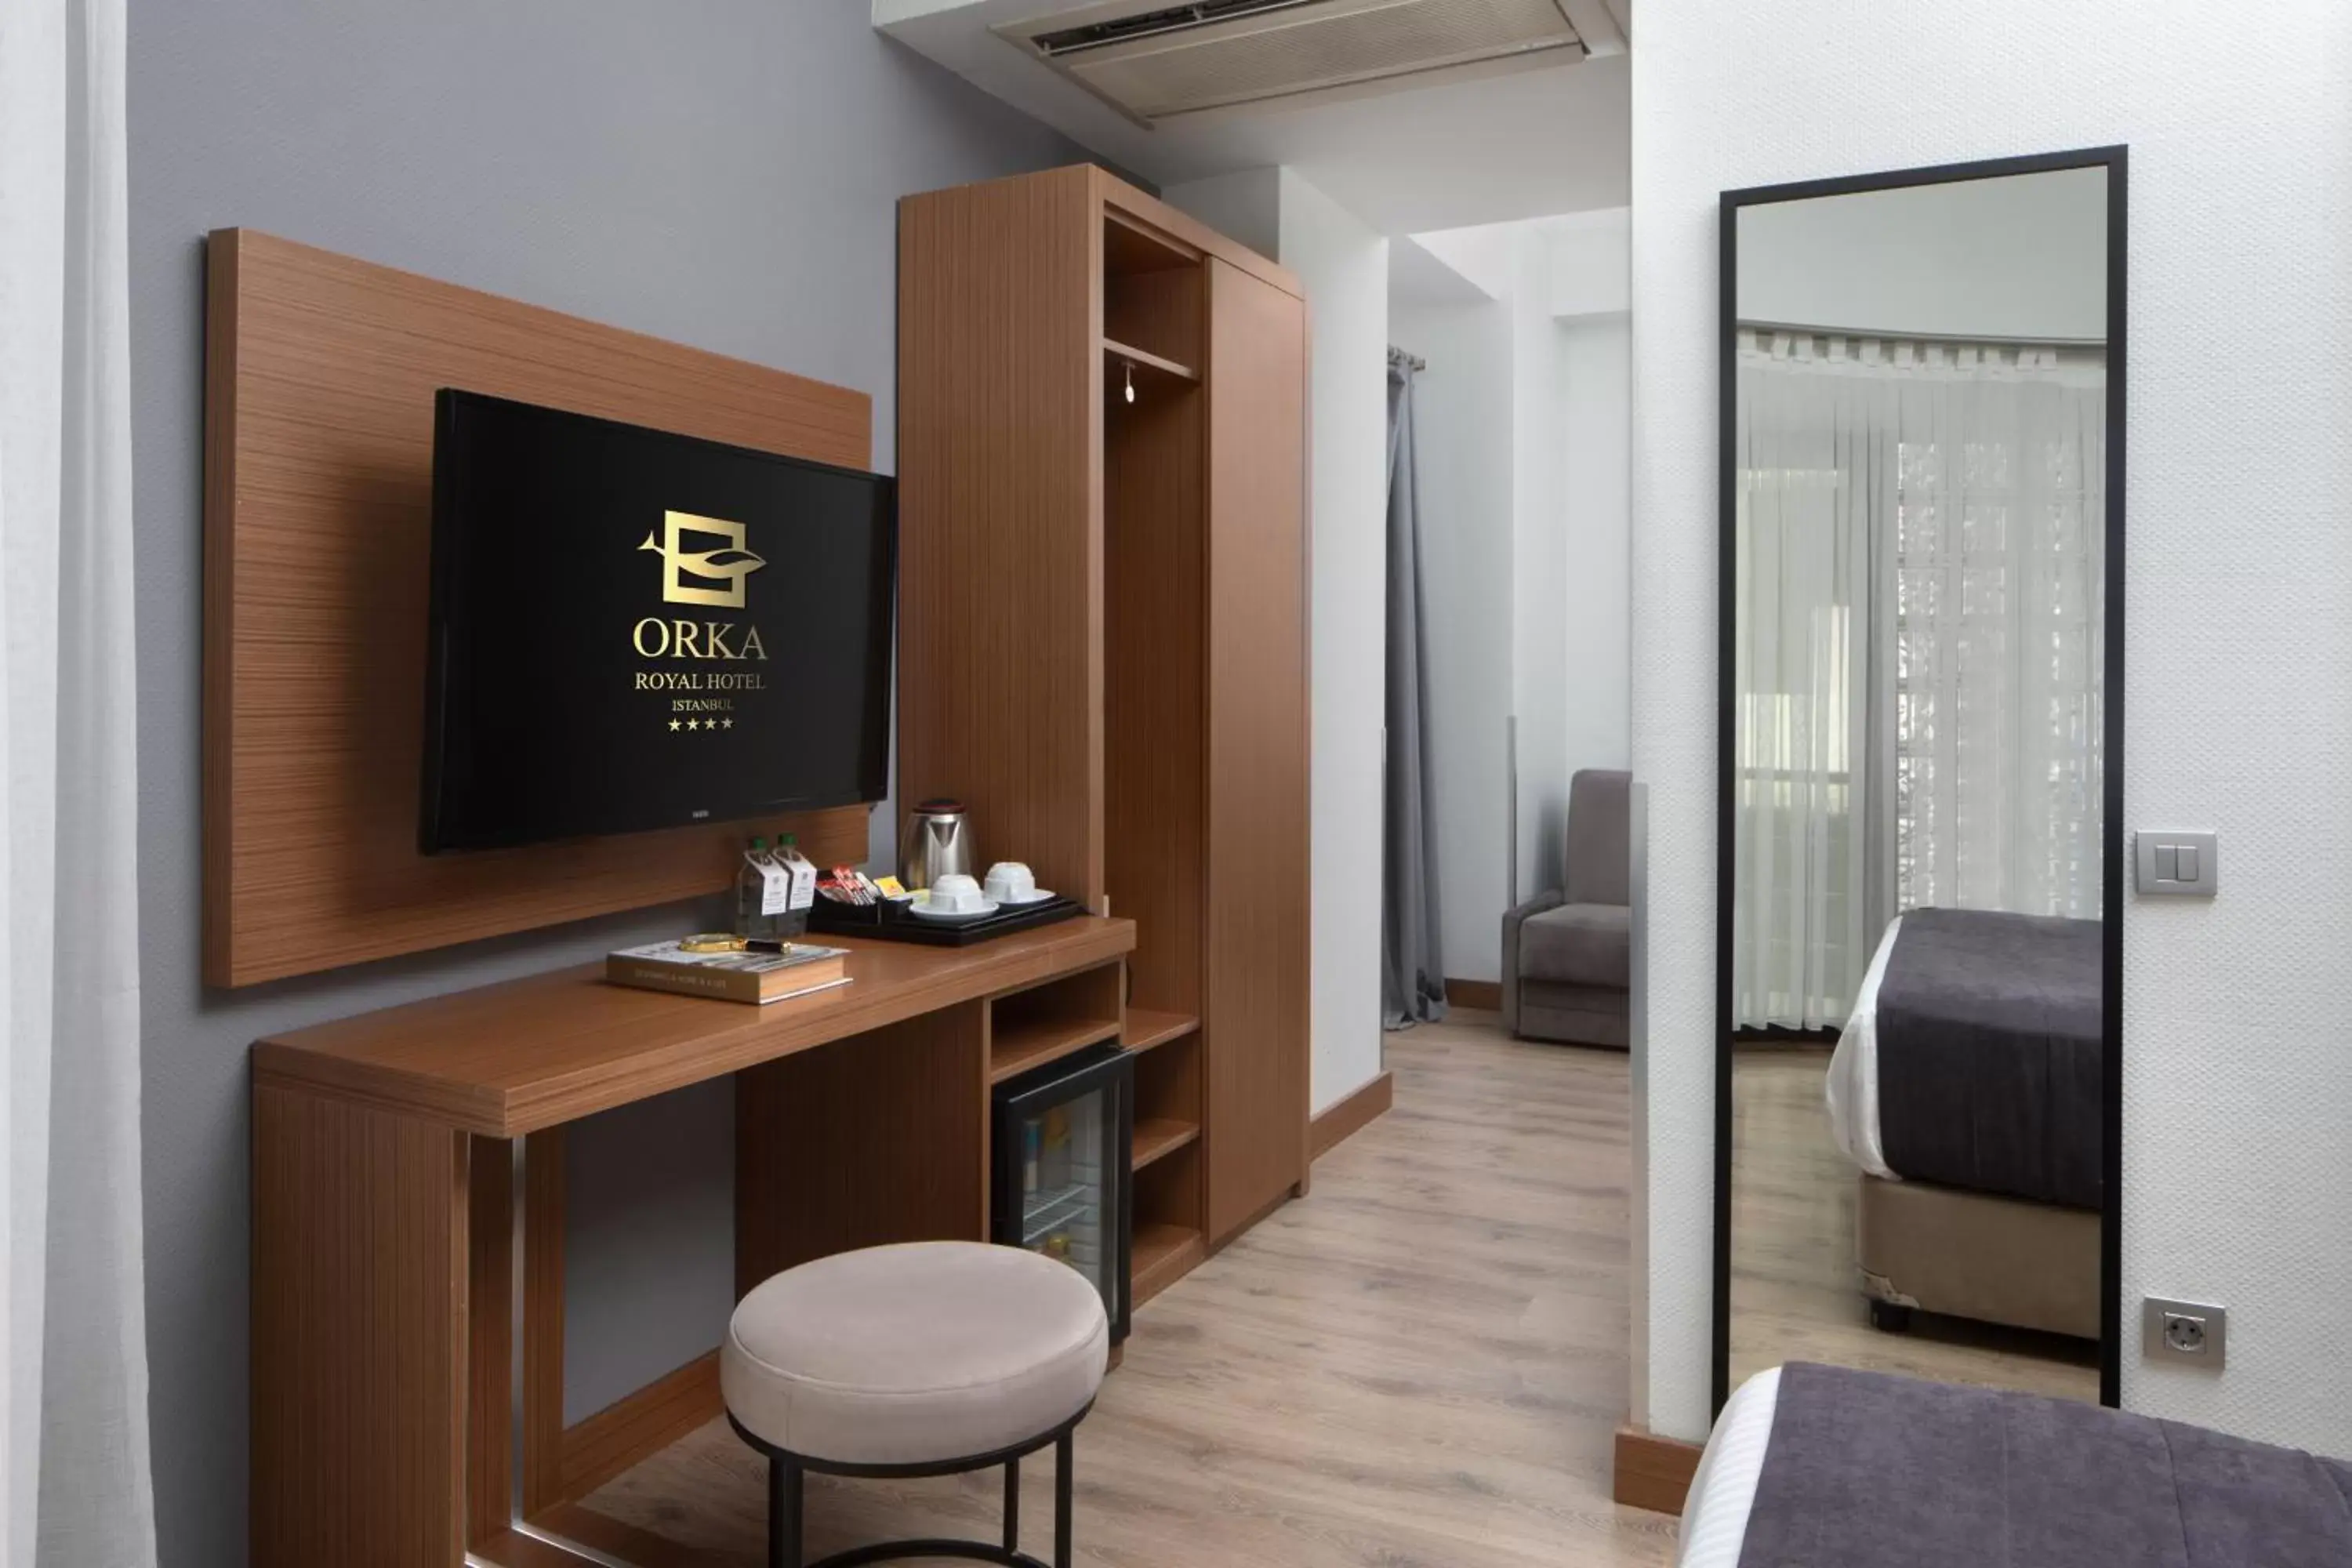 wardrobe, TV/Entertainment Center in Orka Royal Hotel & Spa